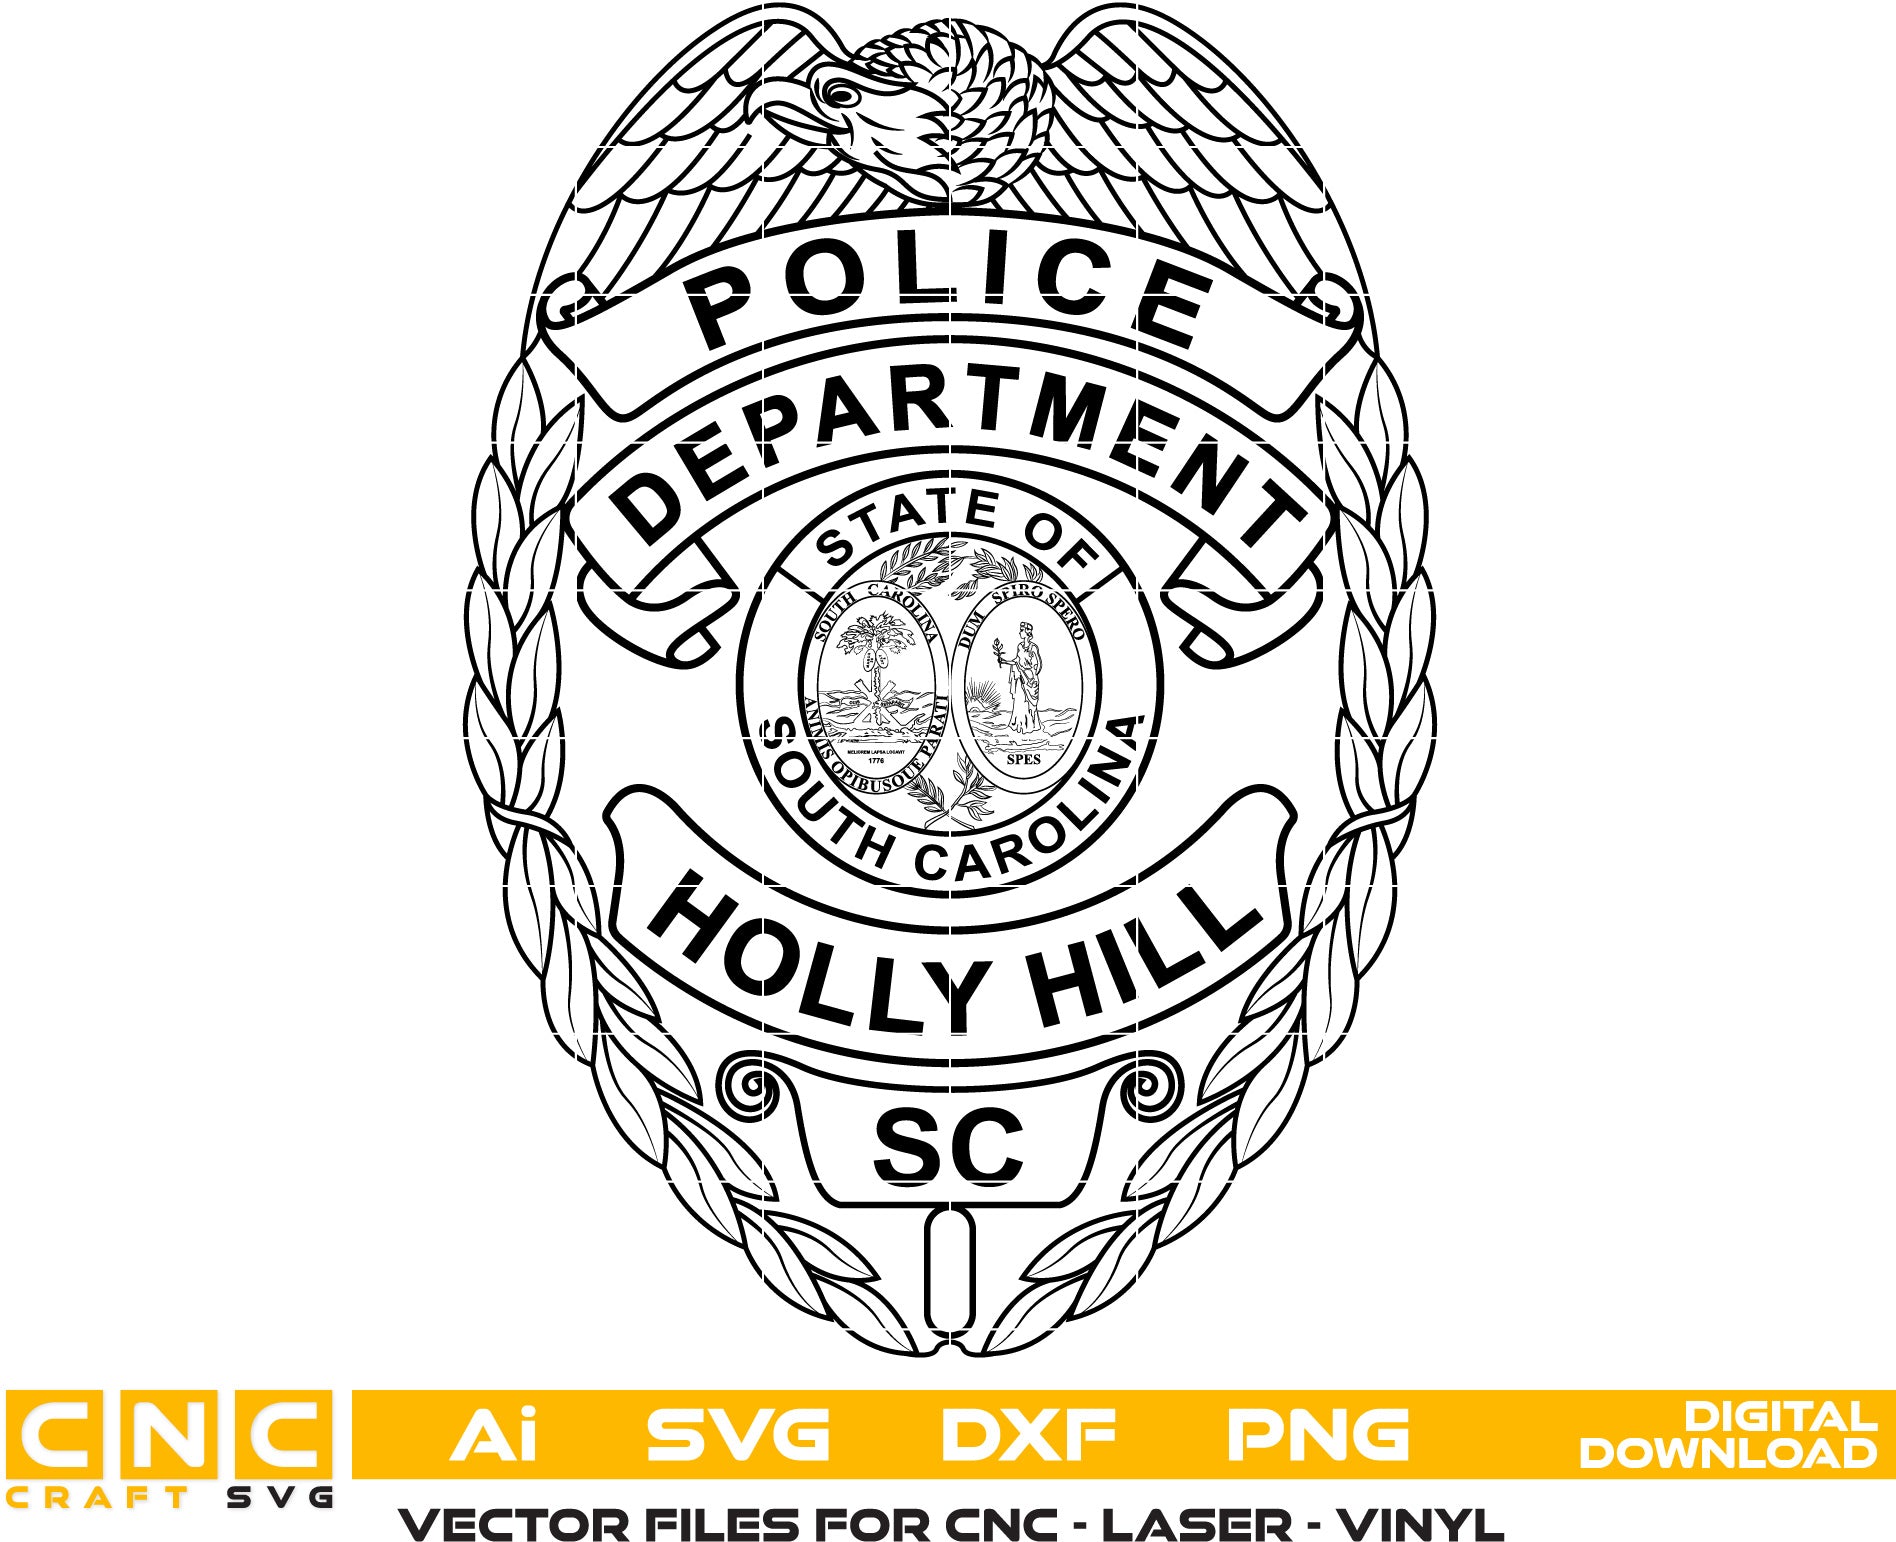 Holly Hill South Carolina Police Badge Vector Art, Ai,SVG, DXF, PNG, Digital Files